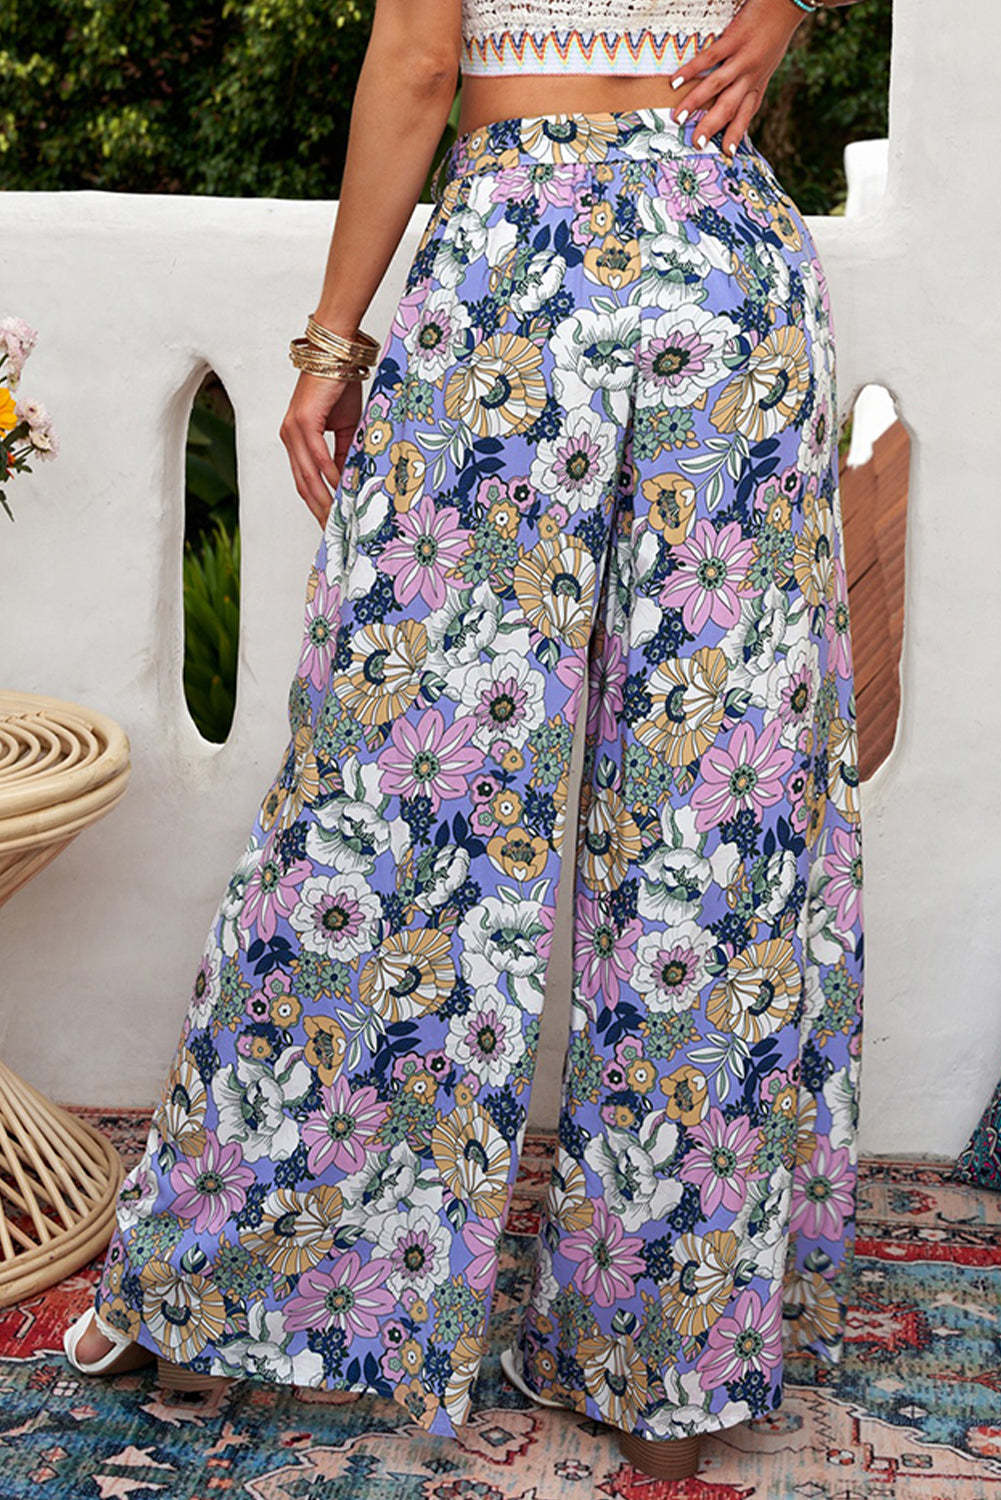 Floral Print Boho Belted Mid Waist Wide Leg Pants $ 23.99 - Evaless